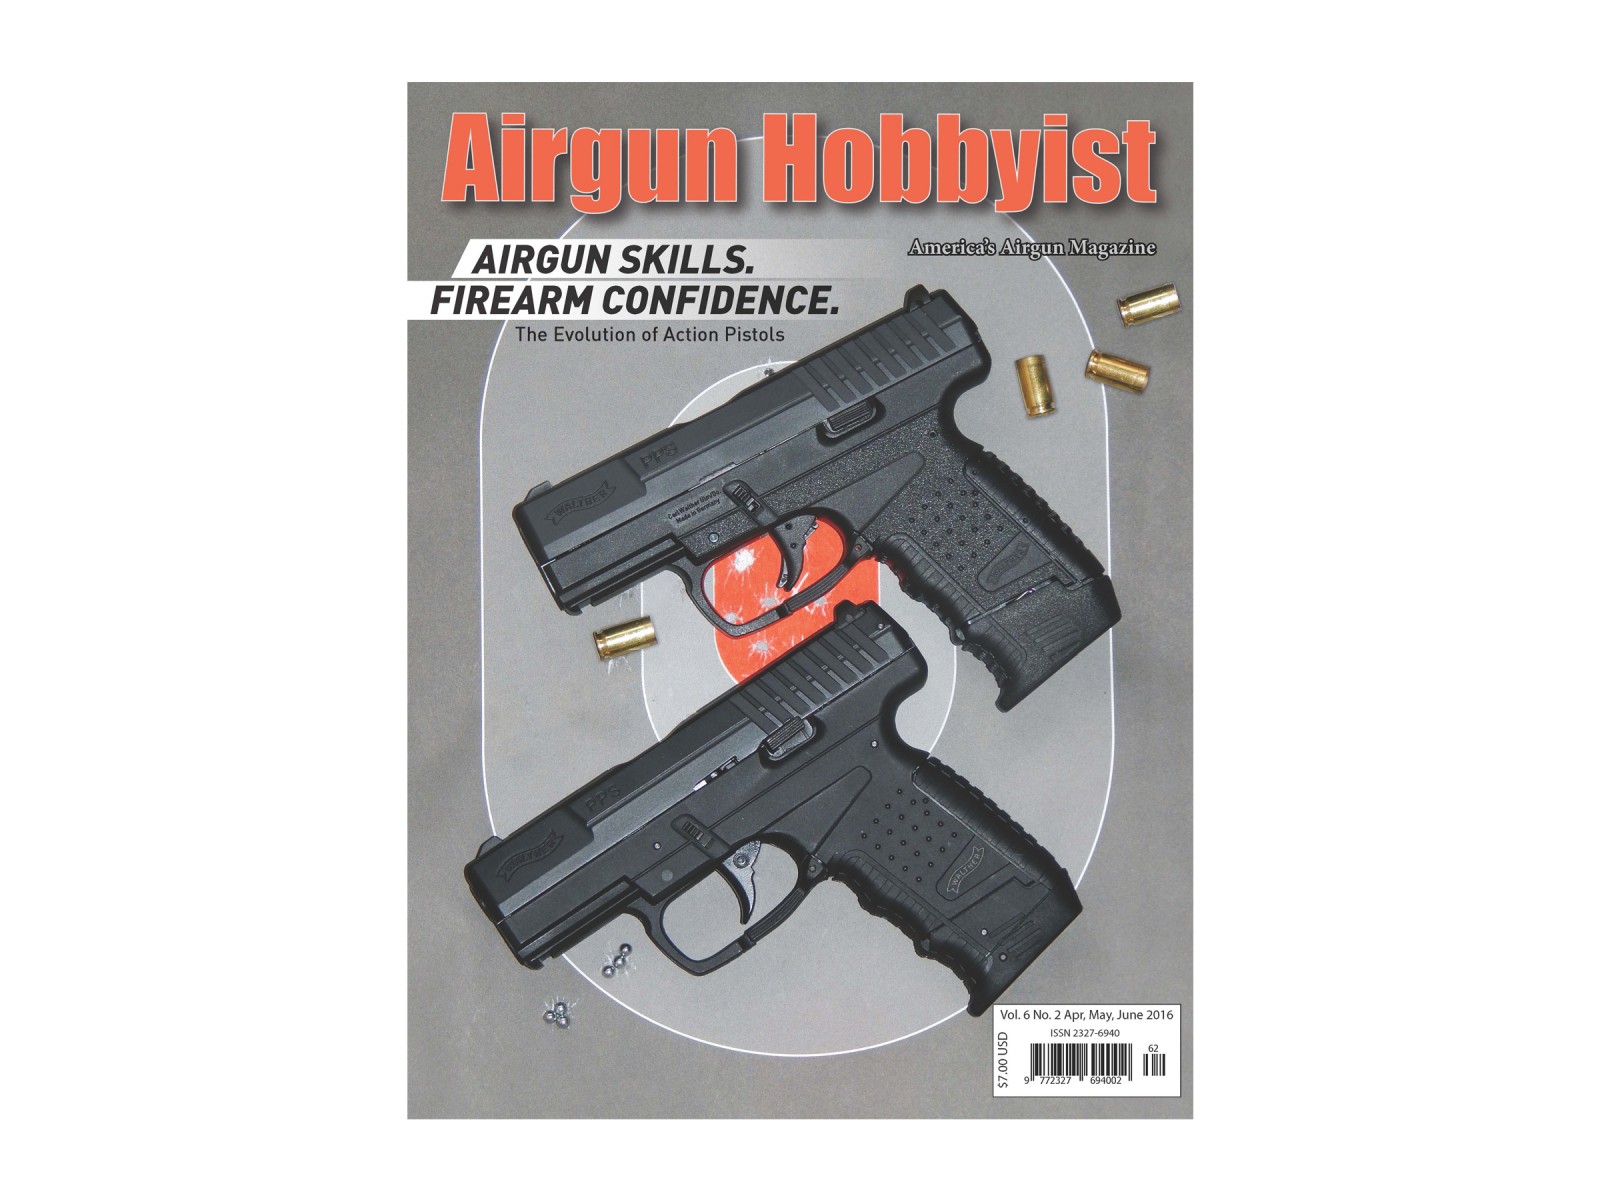 Airgun Hobbyist Magazine, Apr/May/June 2016 Issue